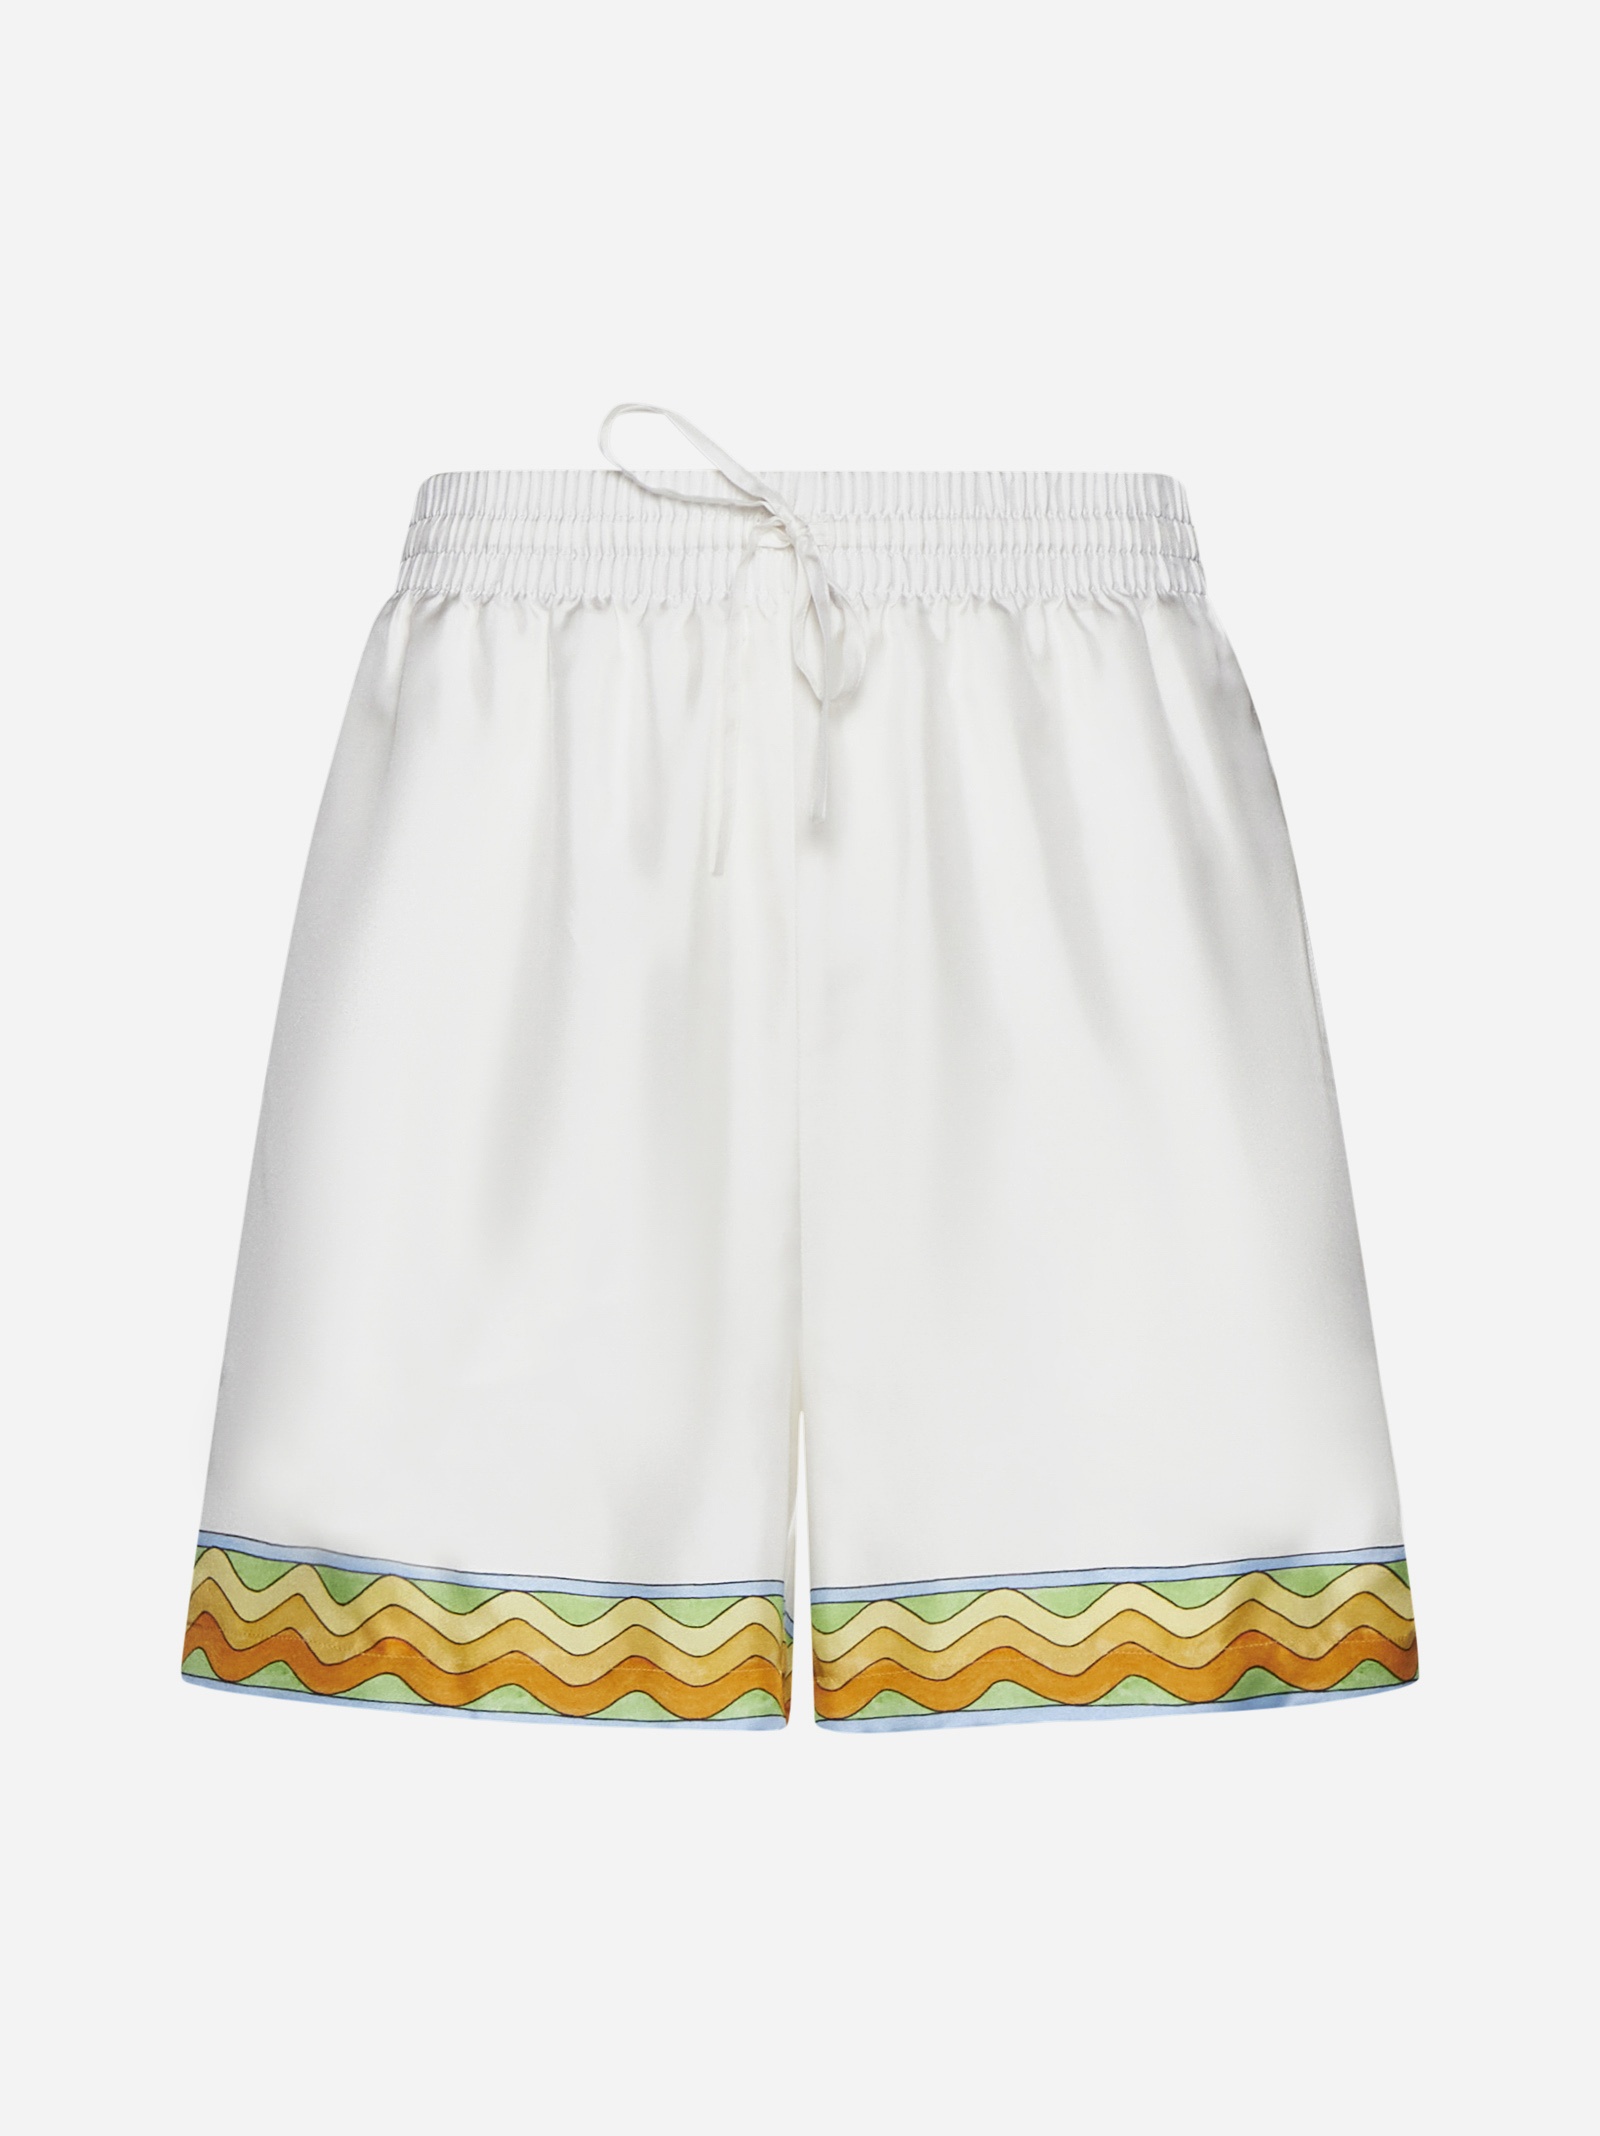 Afro Cubism Tennis Club silk shorts - 1